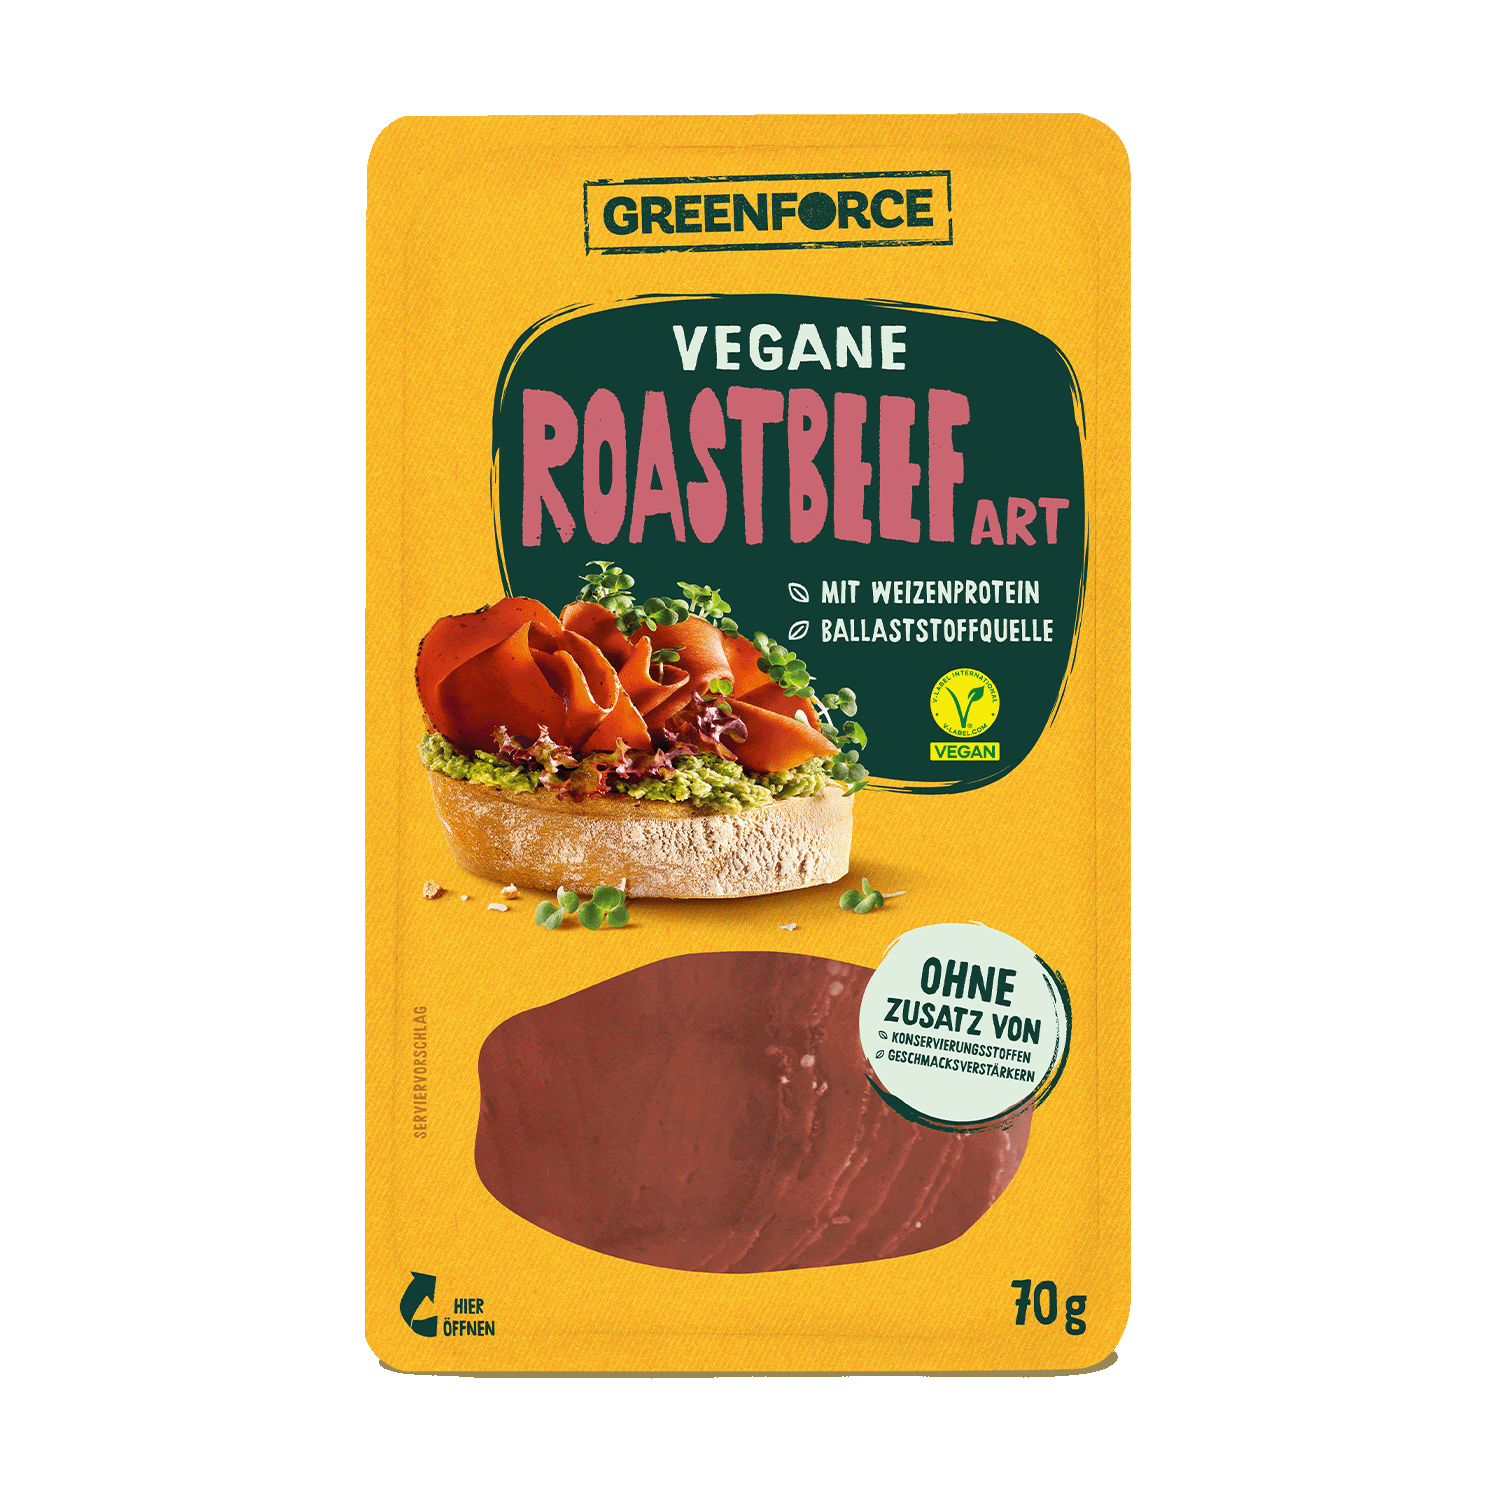 Vegan Cold Cuts Roast Beef Style, 70g